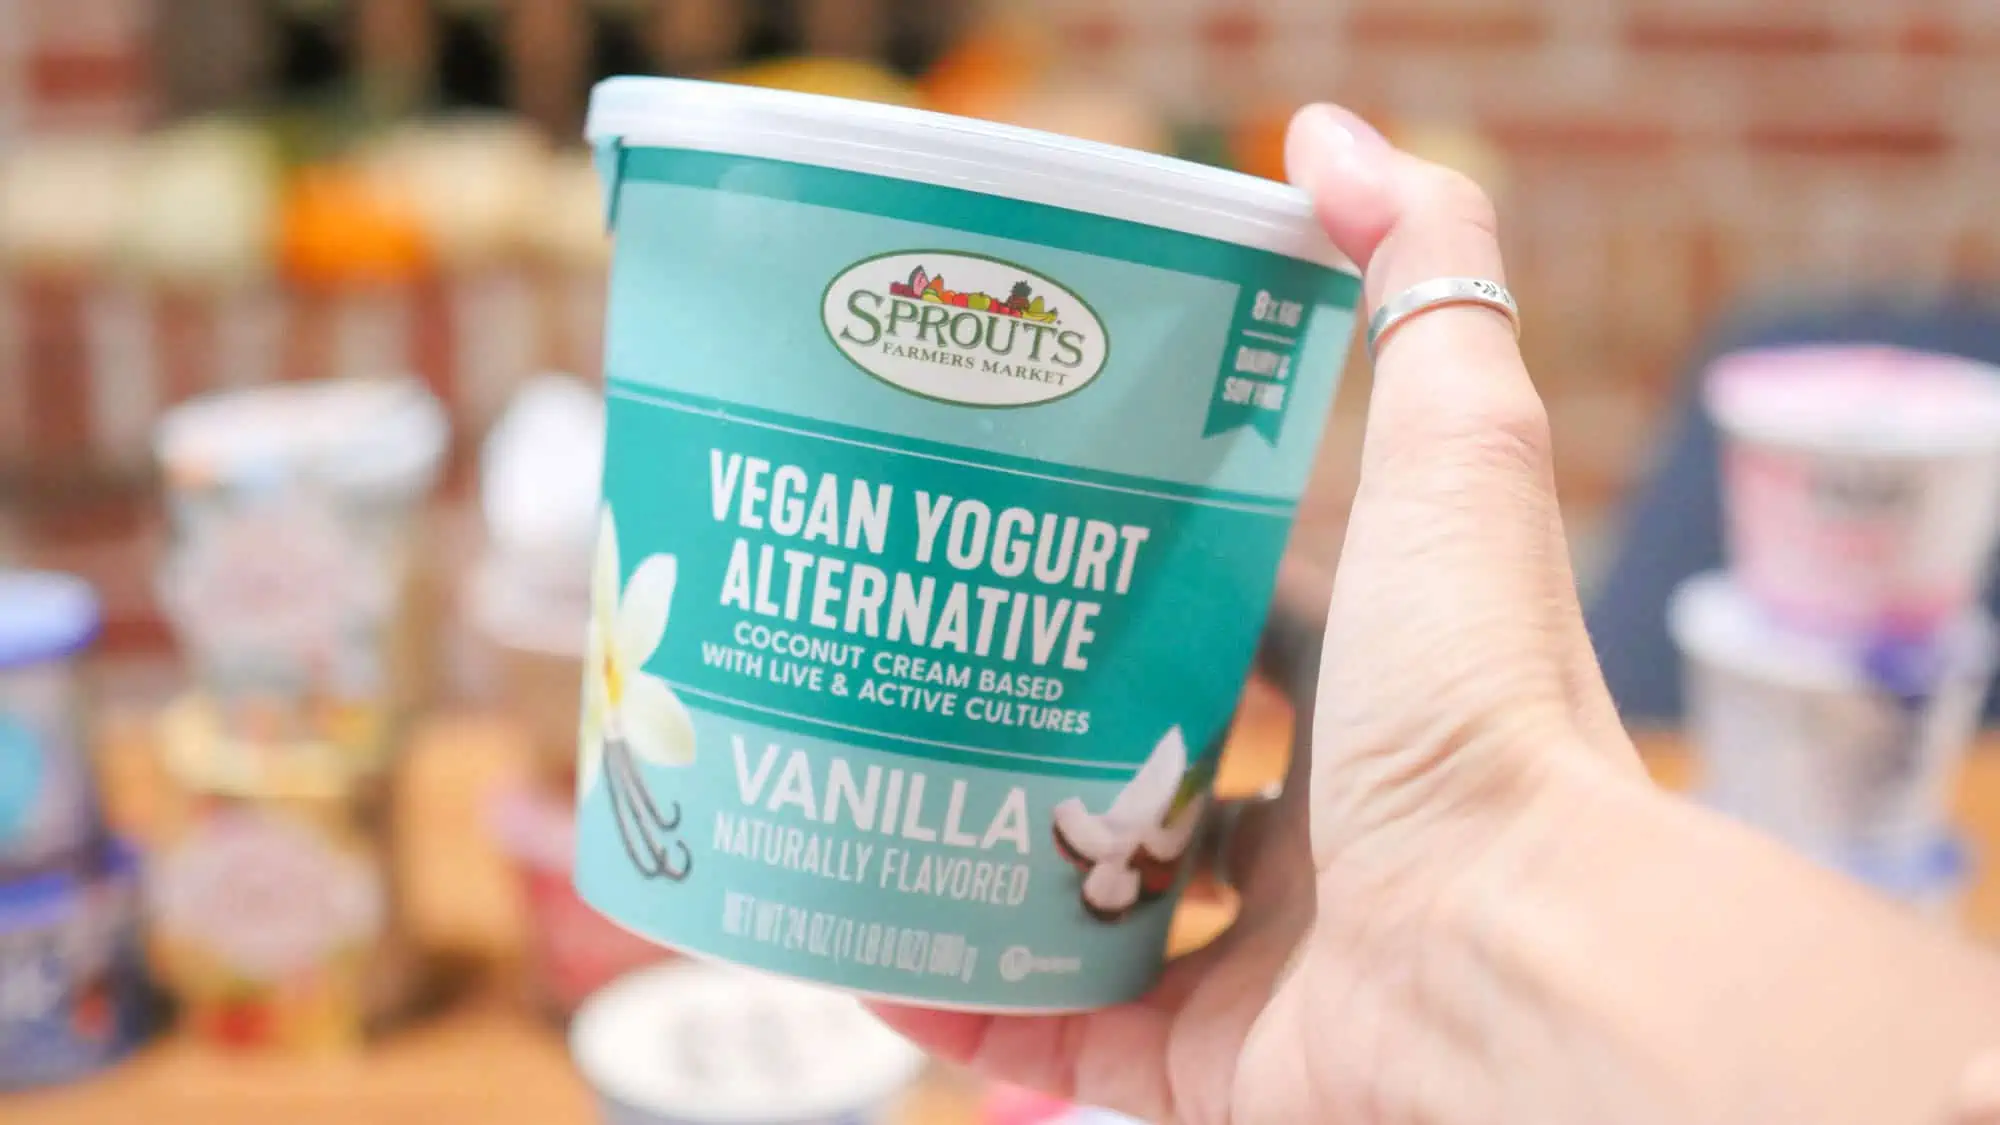 Sprouts Vegan Yogurt